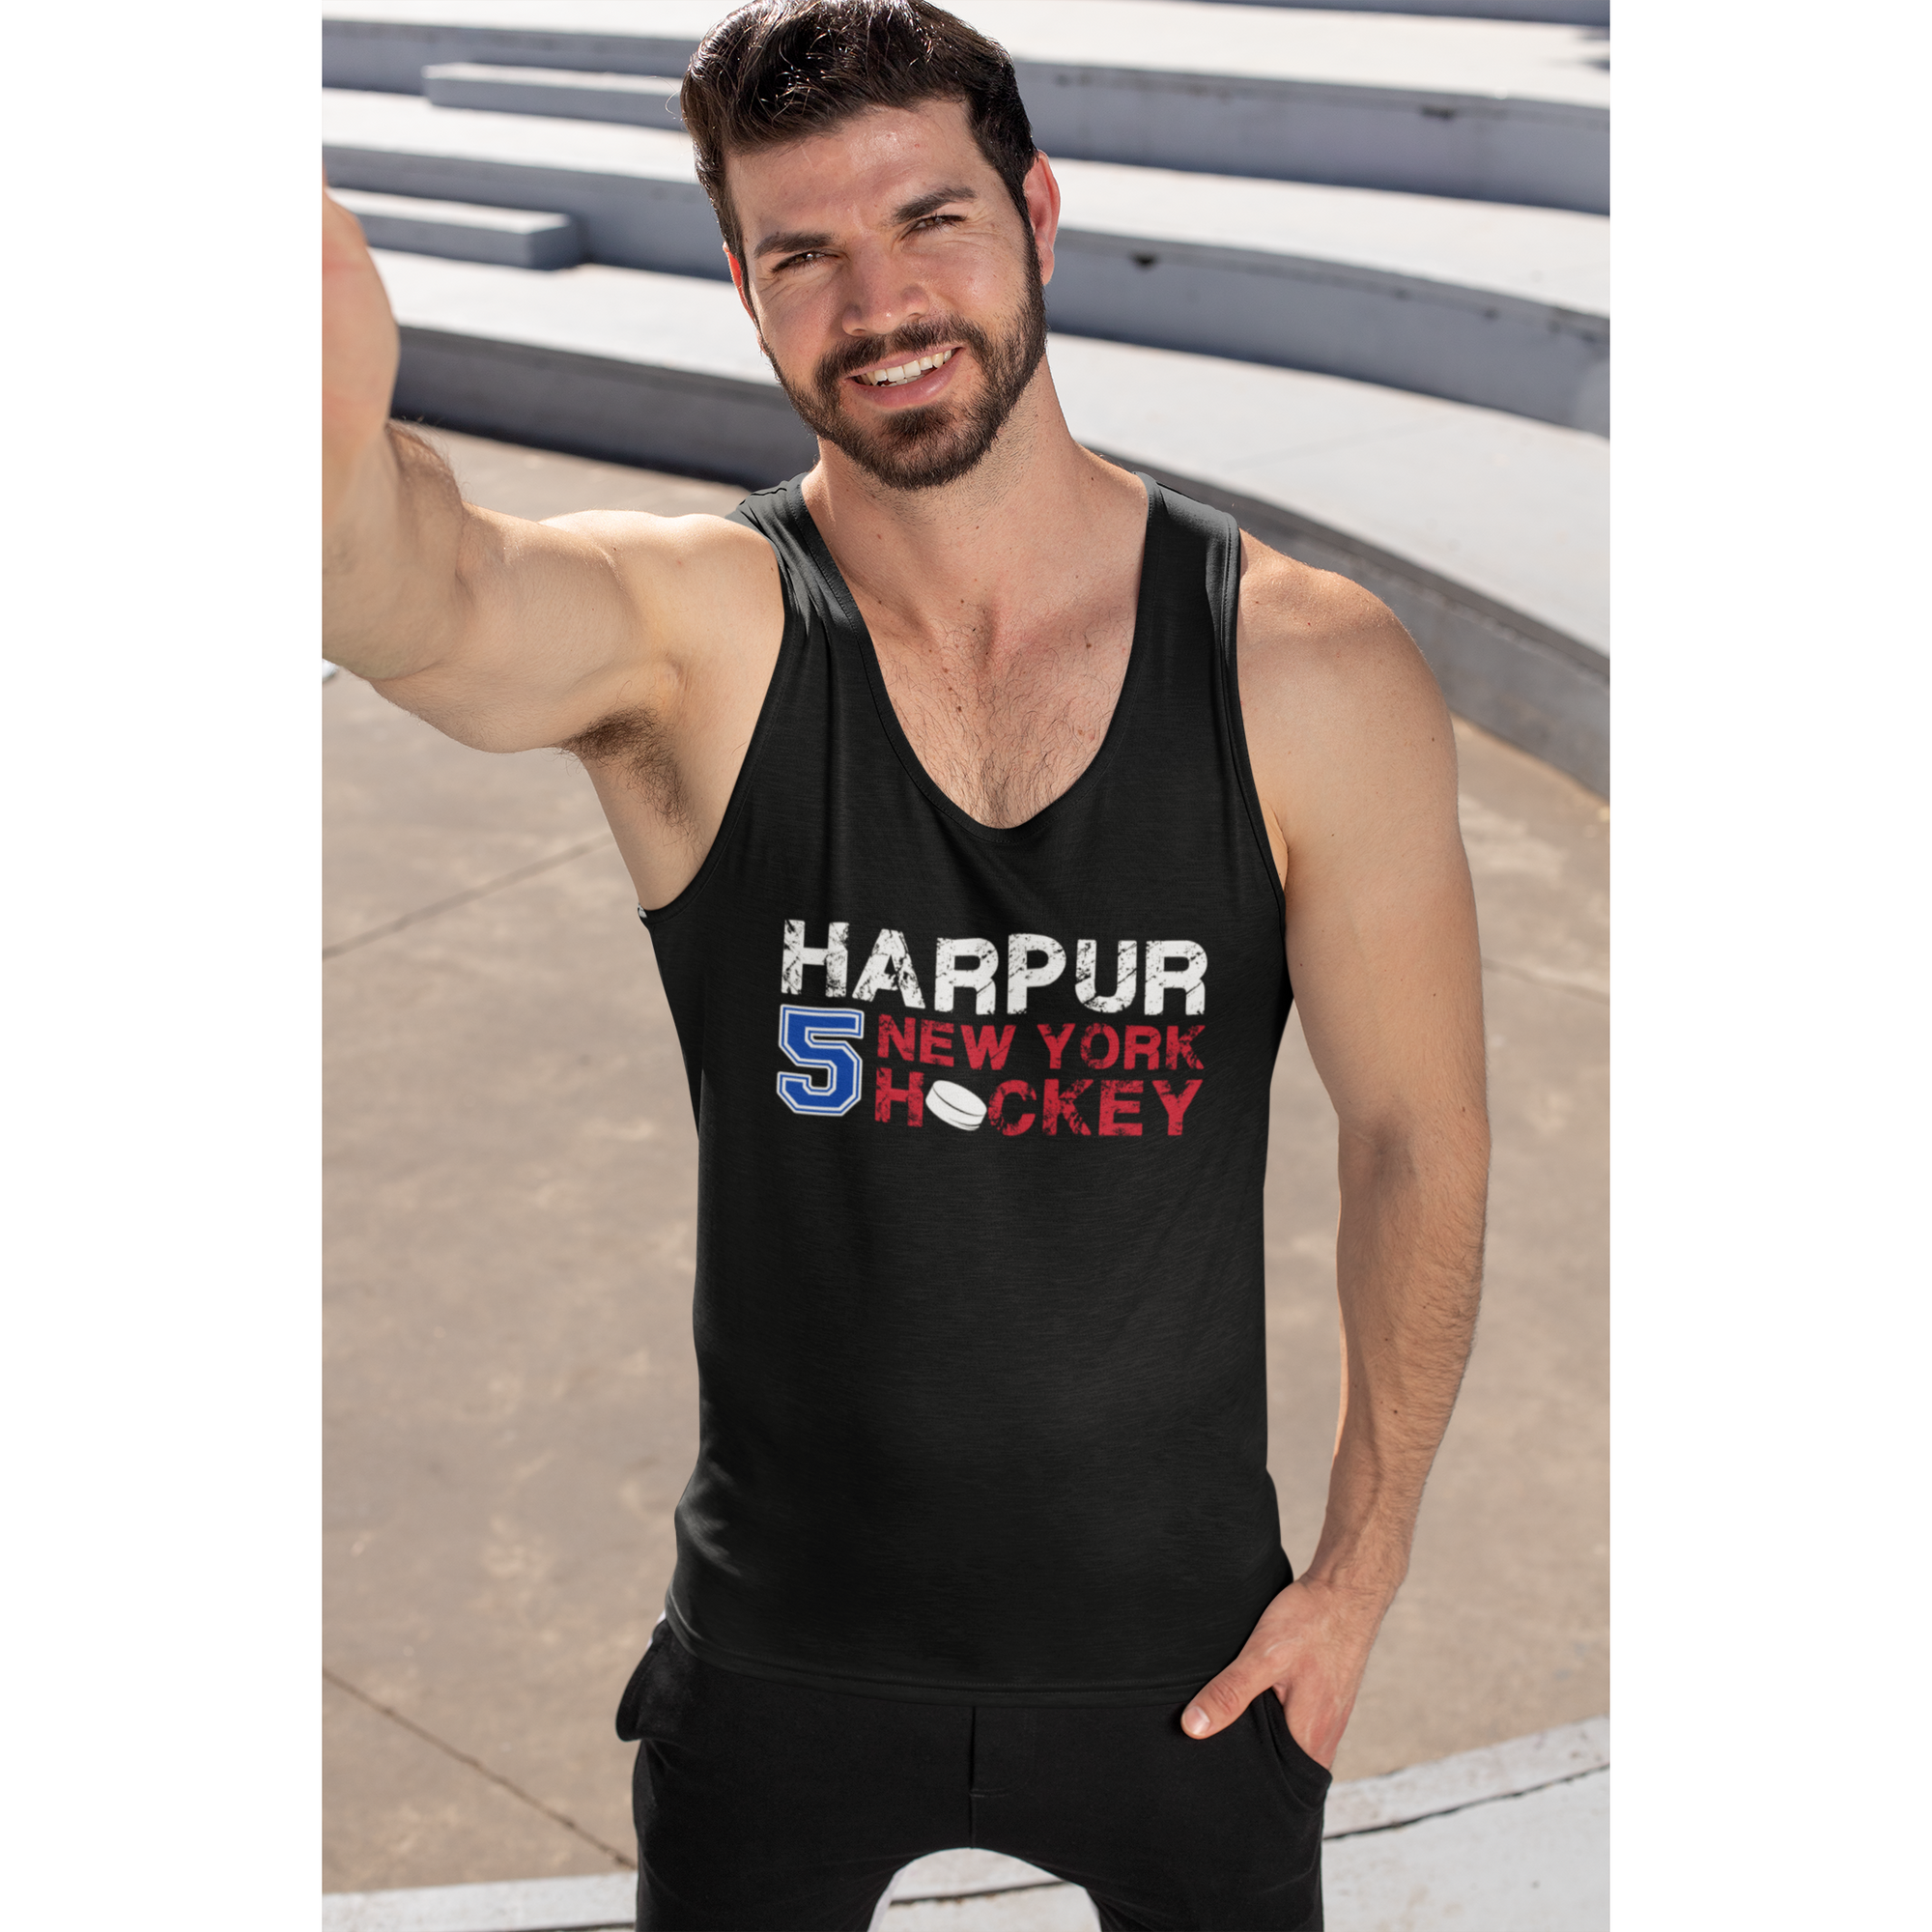 Harpur 5 New York Hockey Unisex Jersey Tank Top